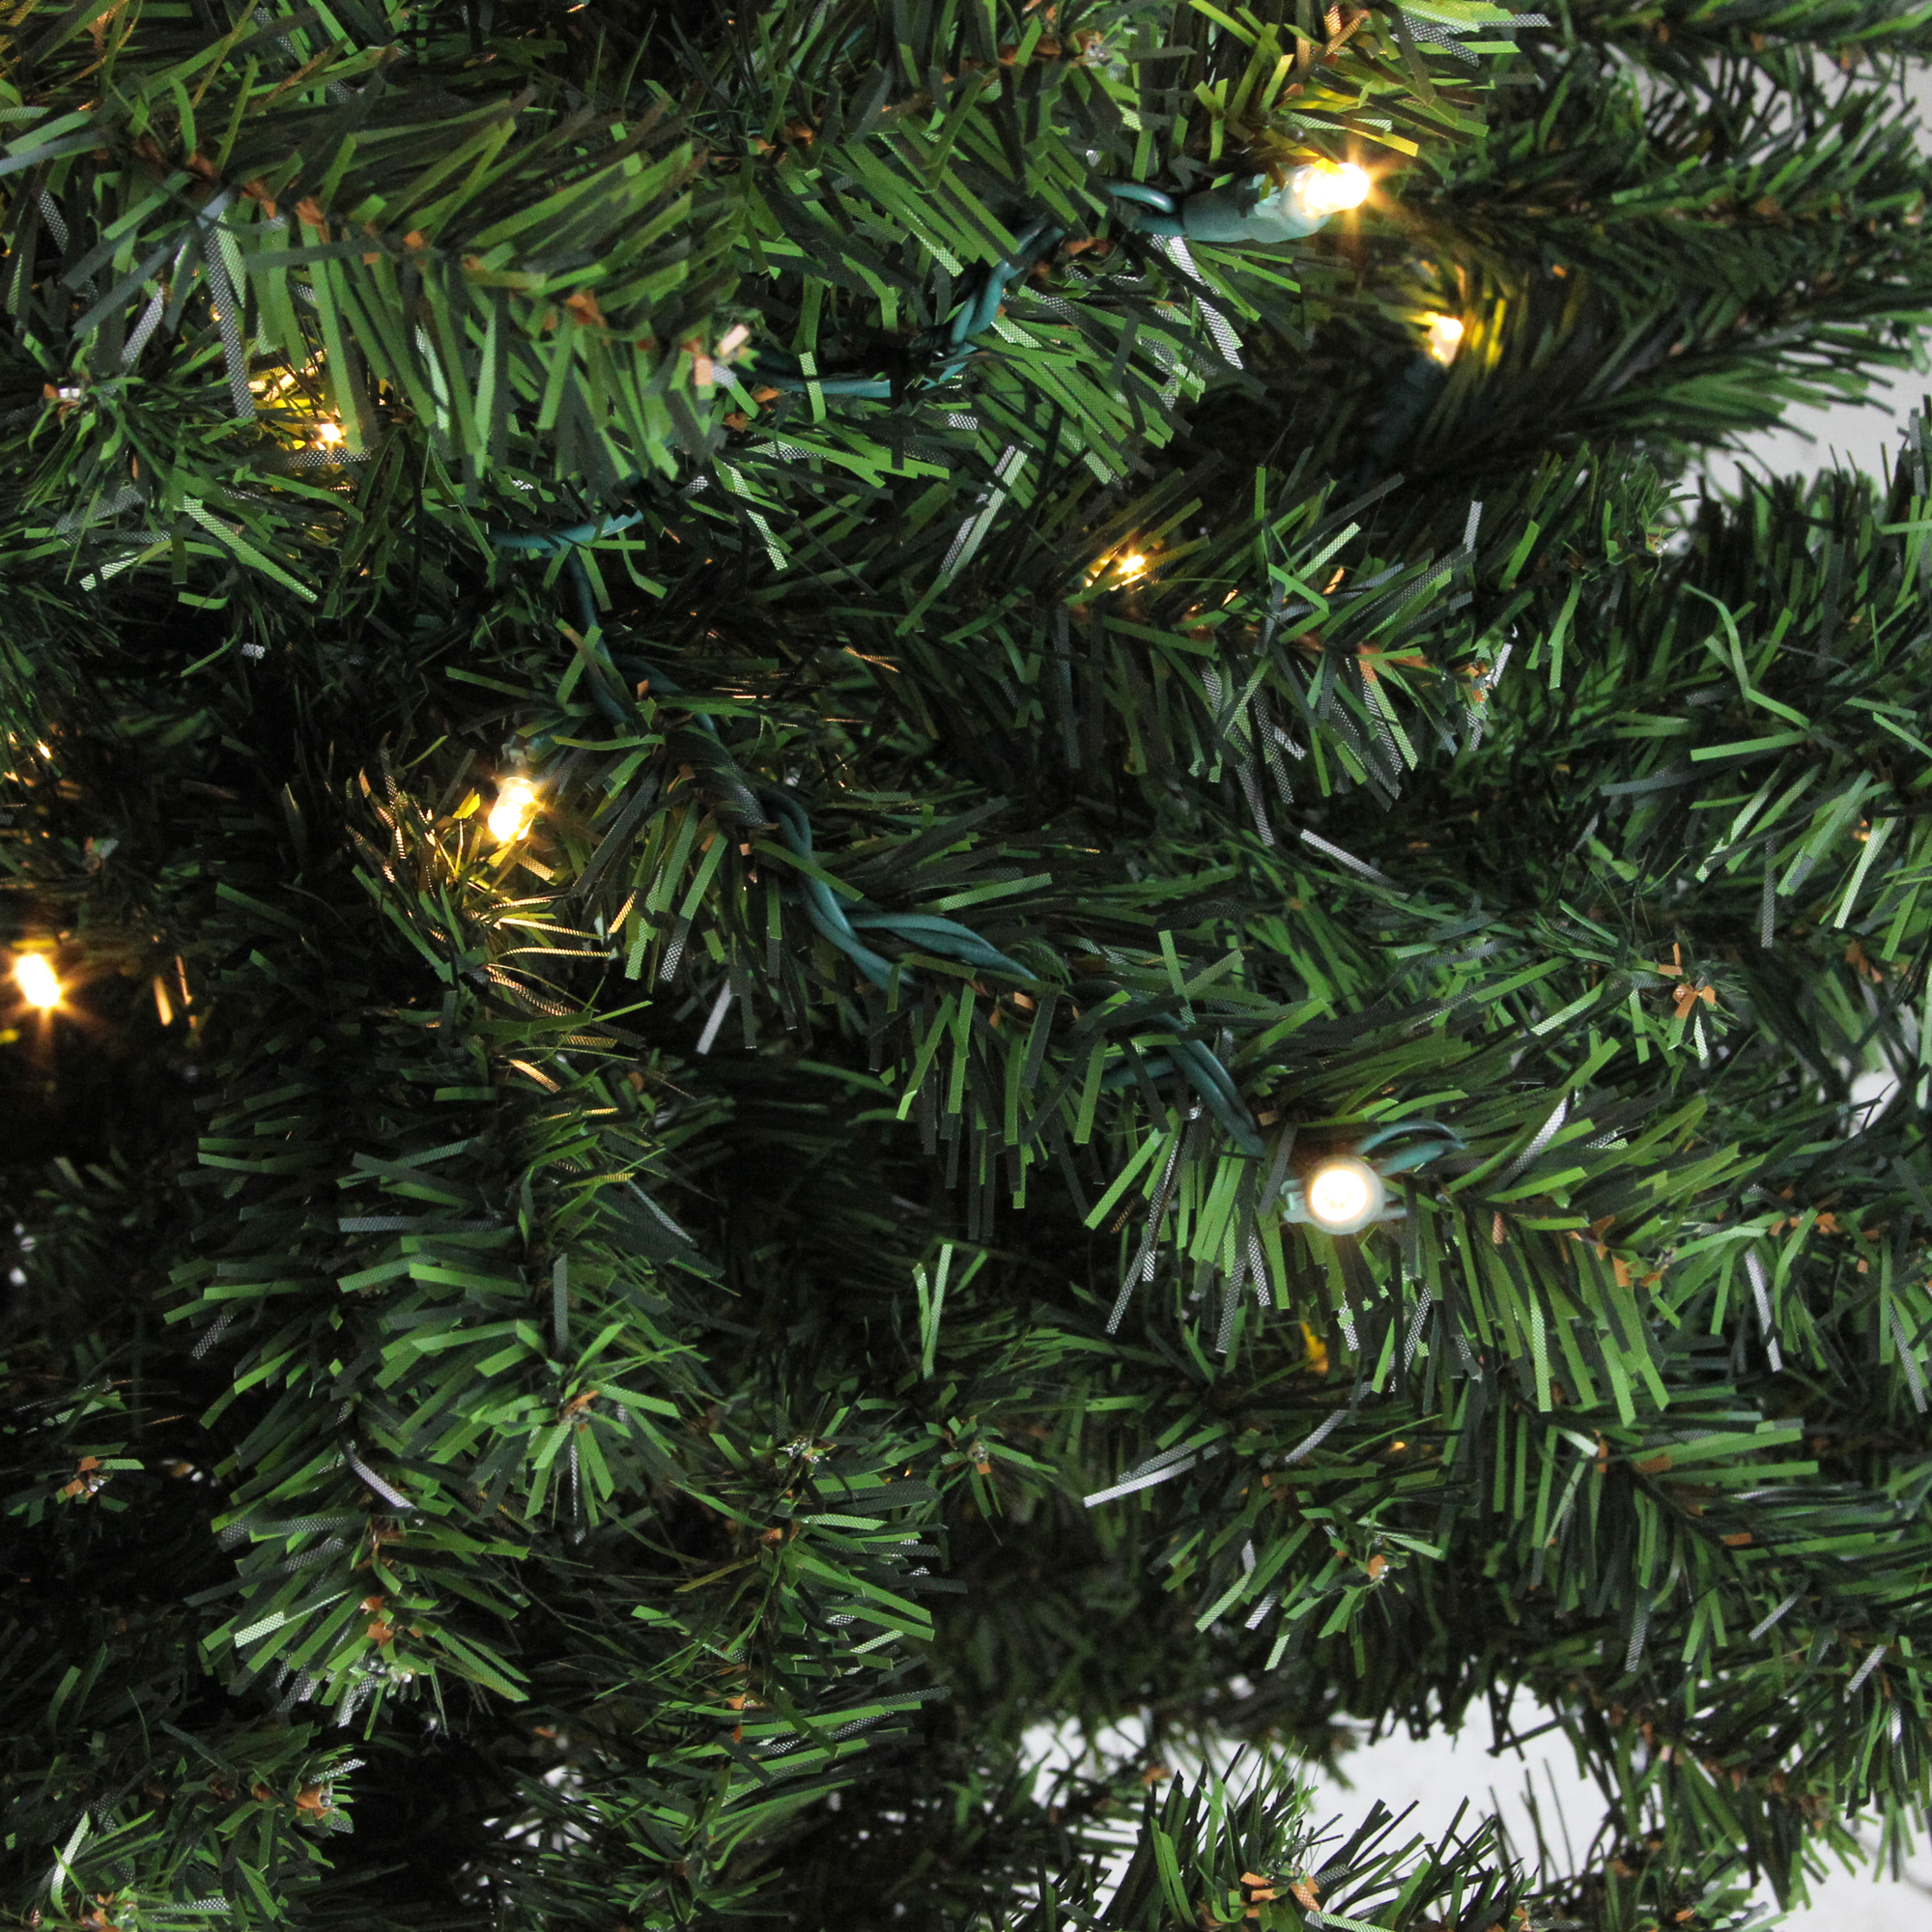 Northlight 8' Pre-Lit Medium Canadian Pine Artificial Christmas Tree - Candlelight LED Lights